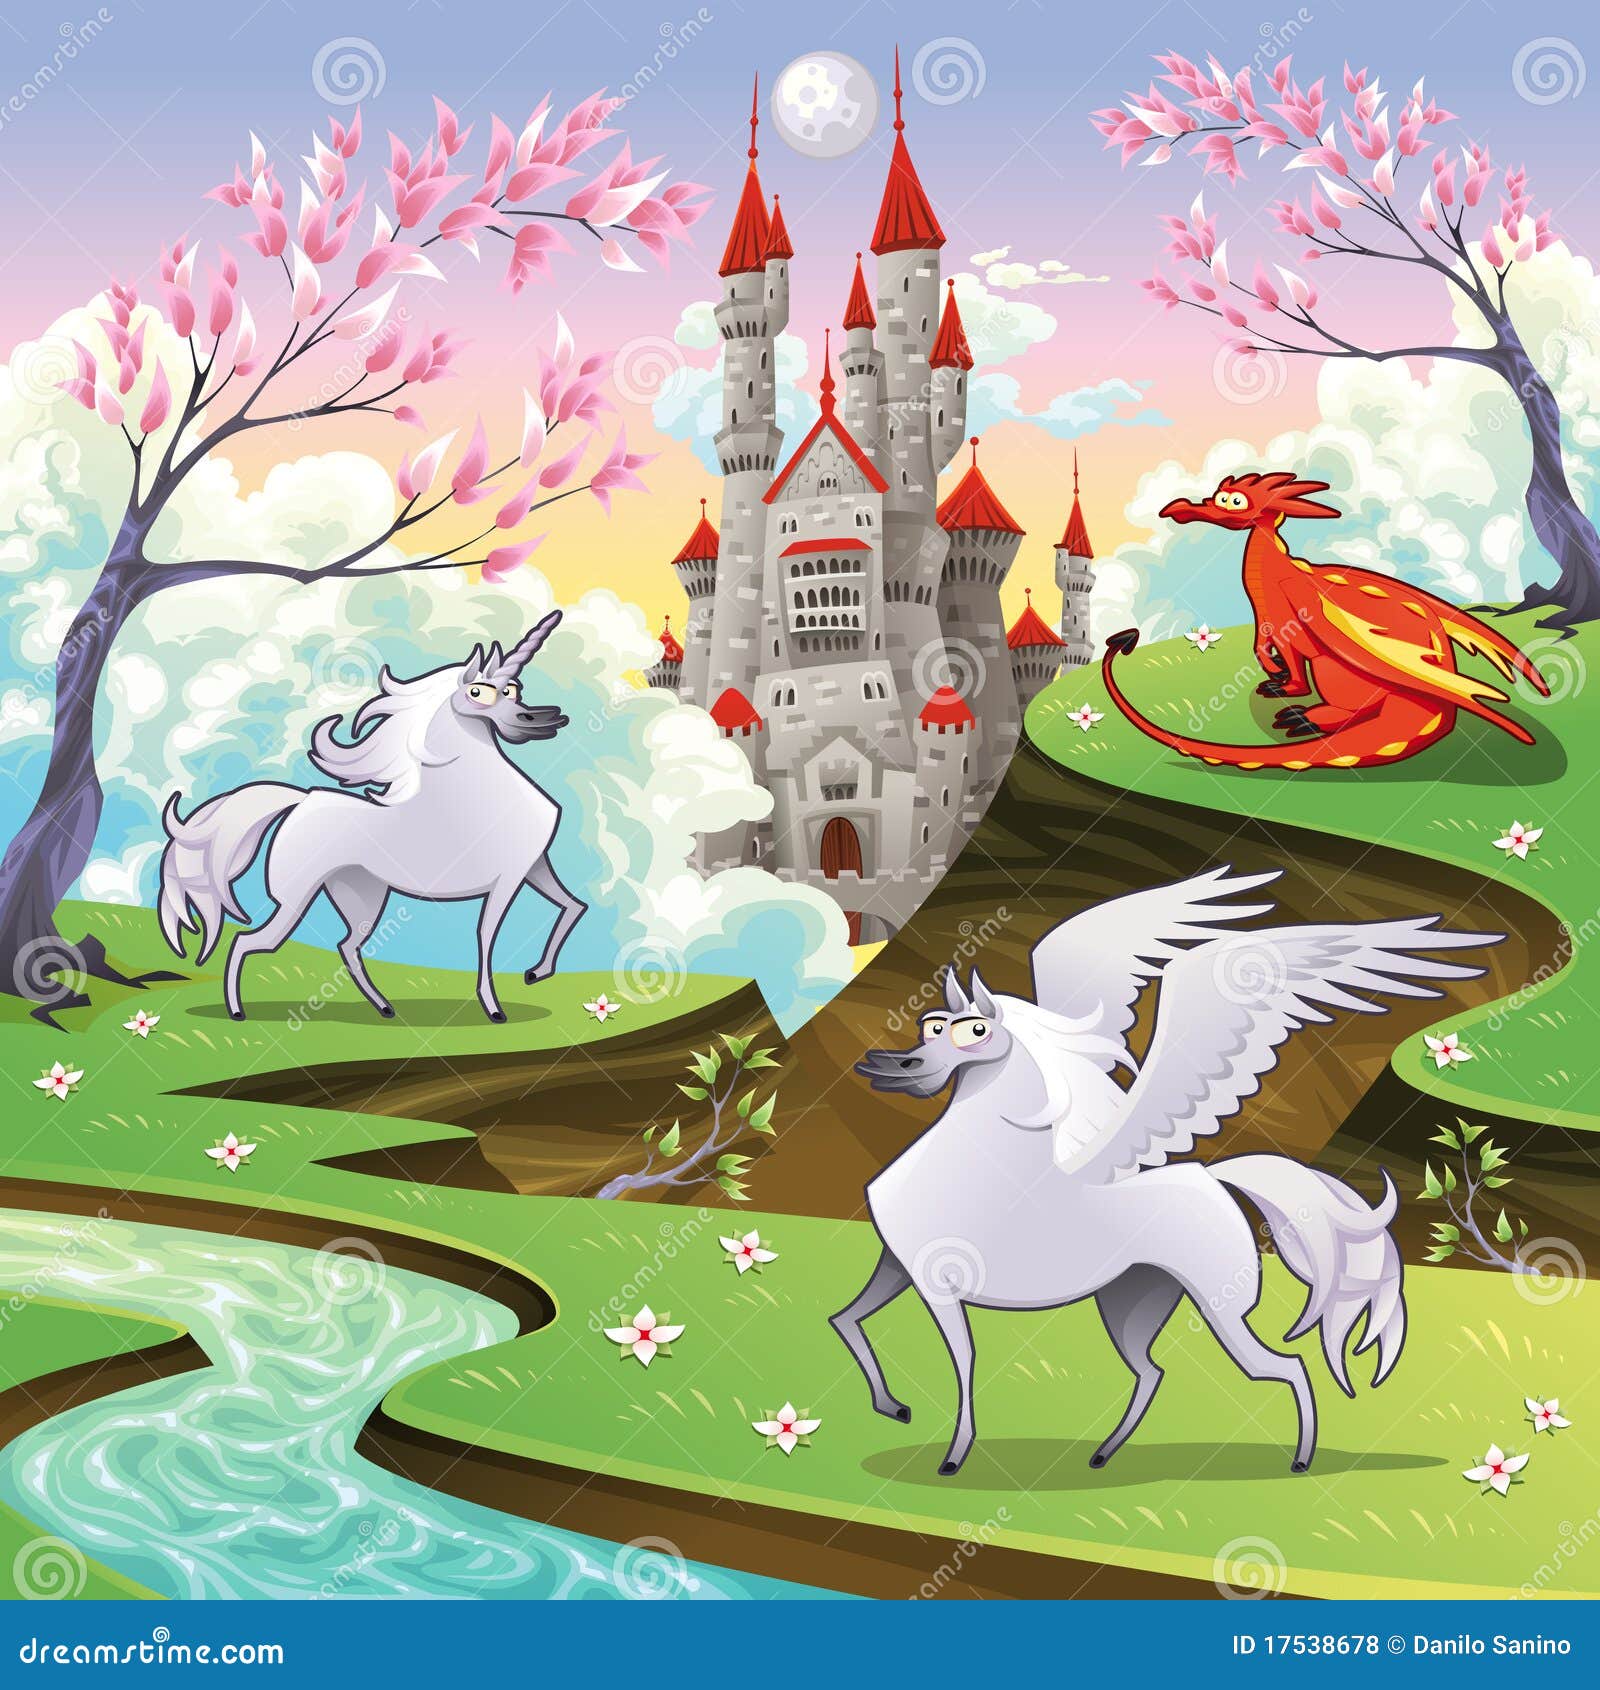 pegasus, unicorn and dragon in a mythological land